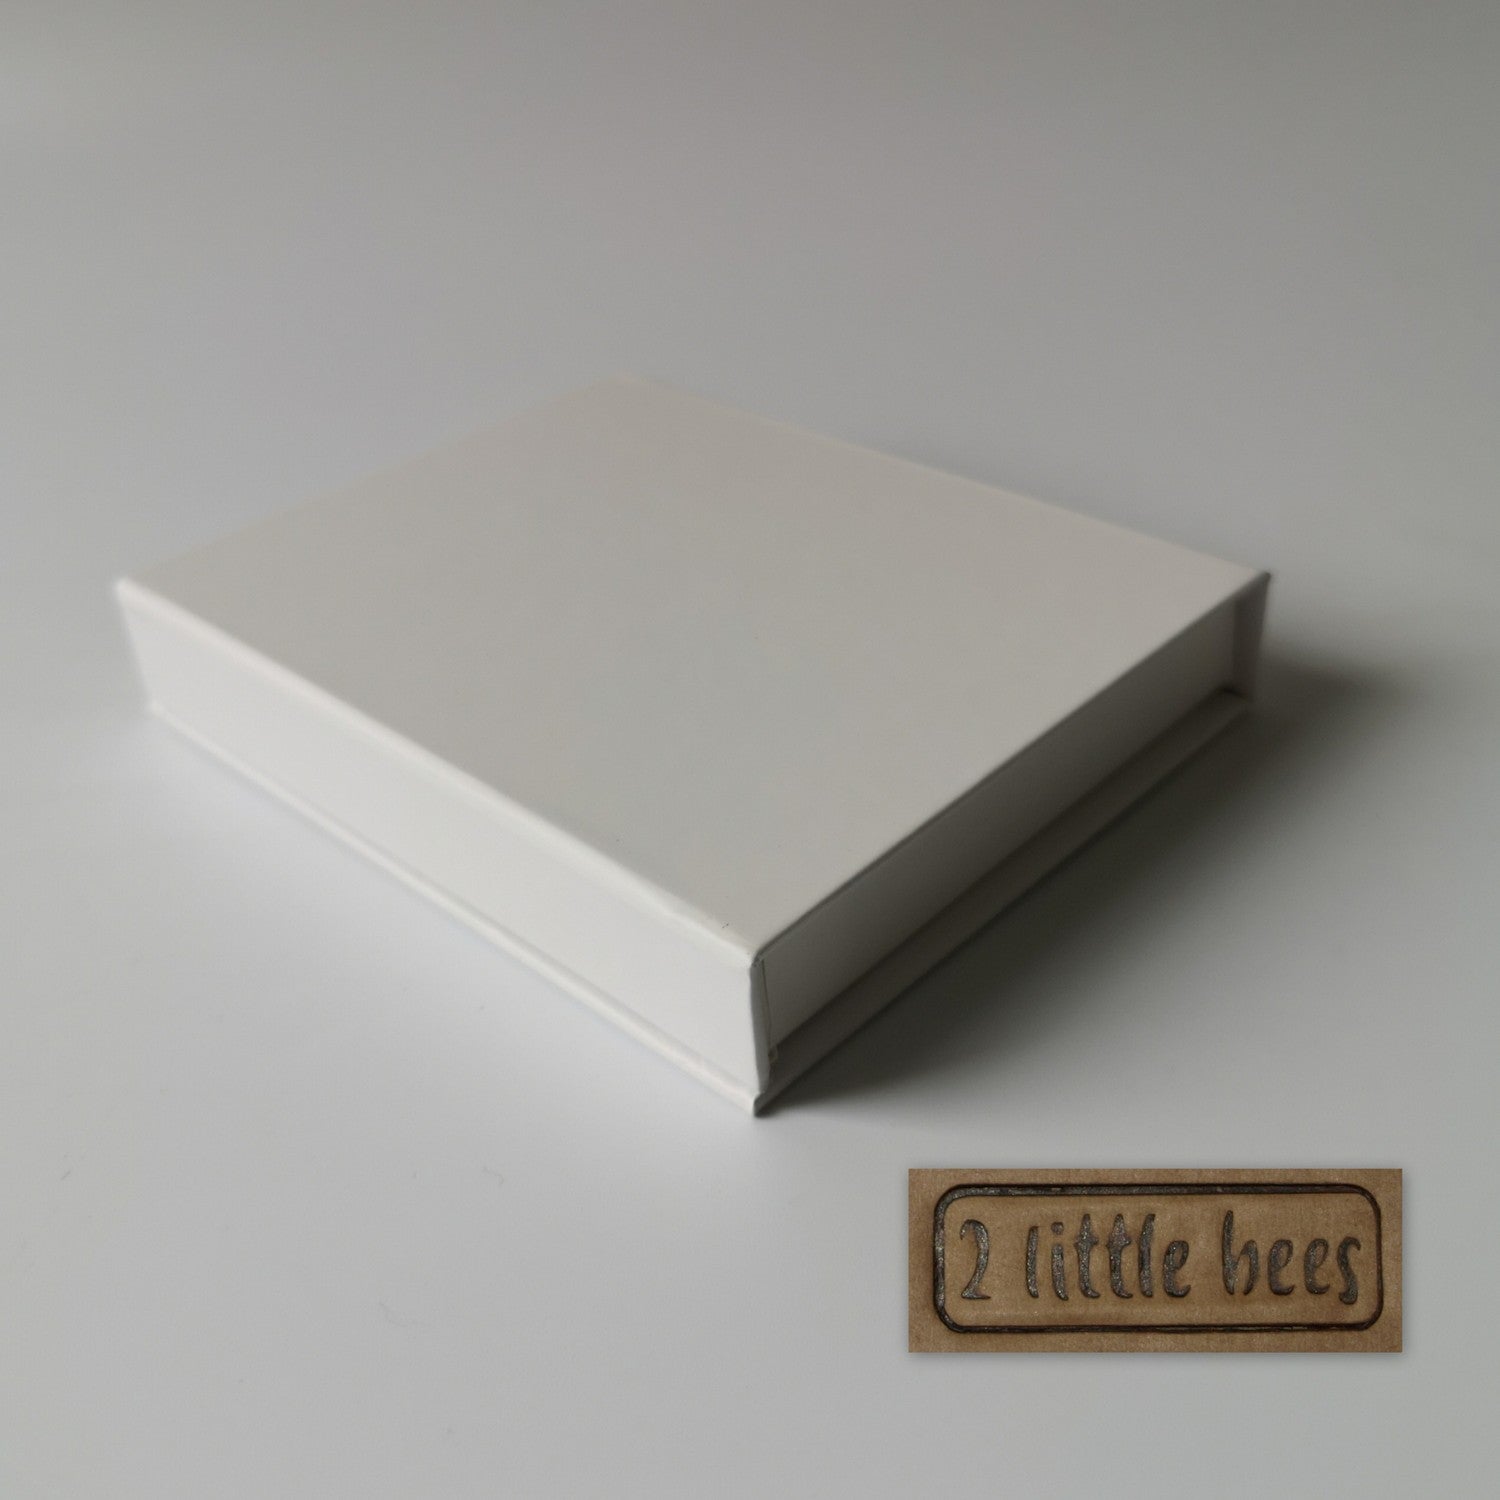 Gift card box. White